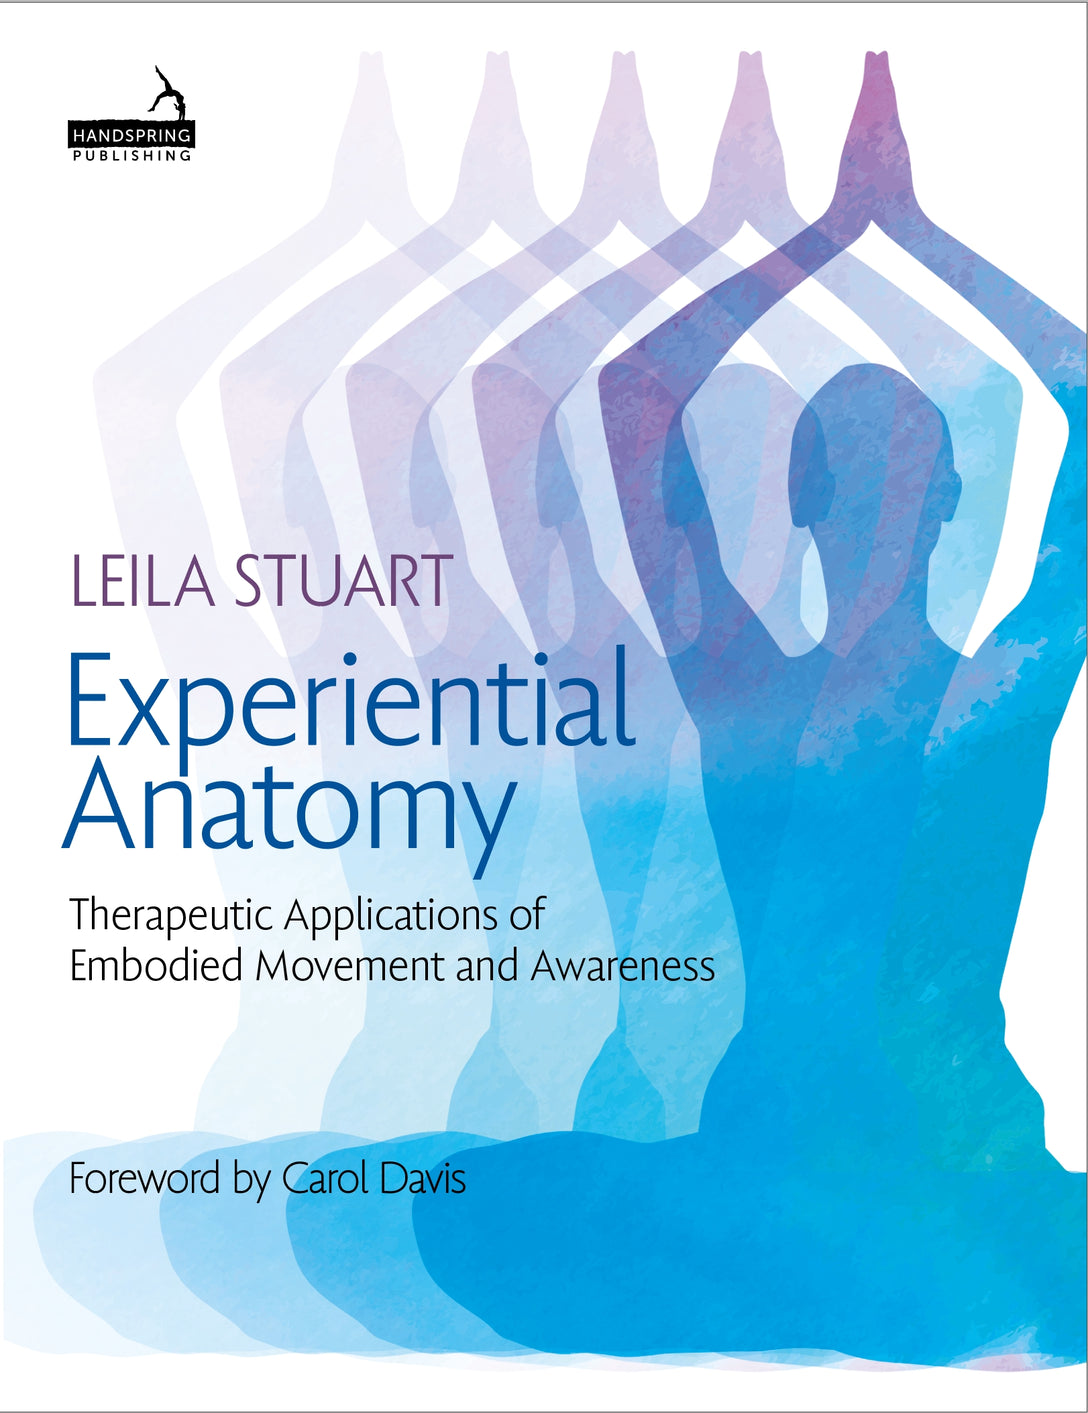 Experiential Anatomy by Leila Stuart